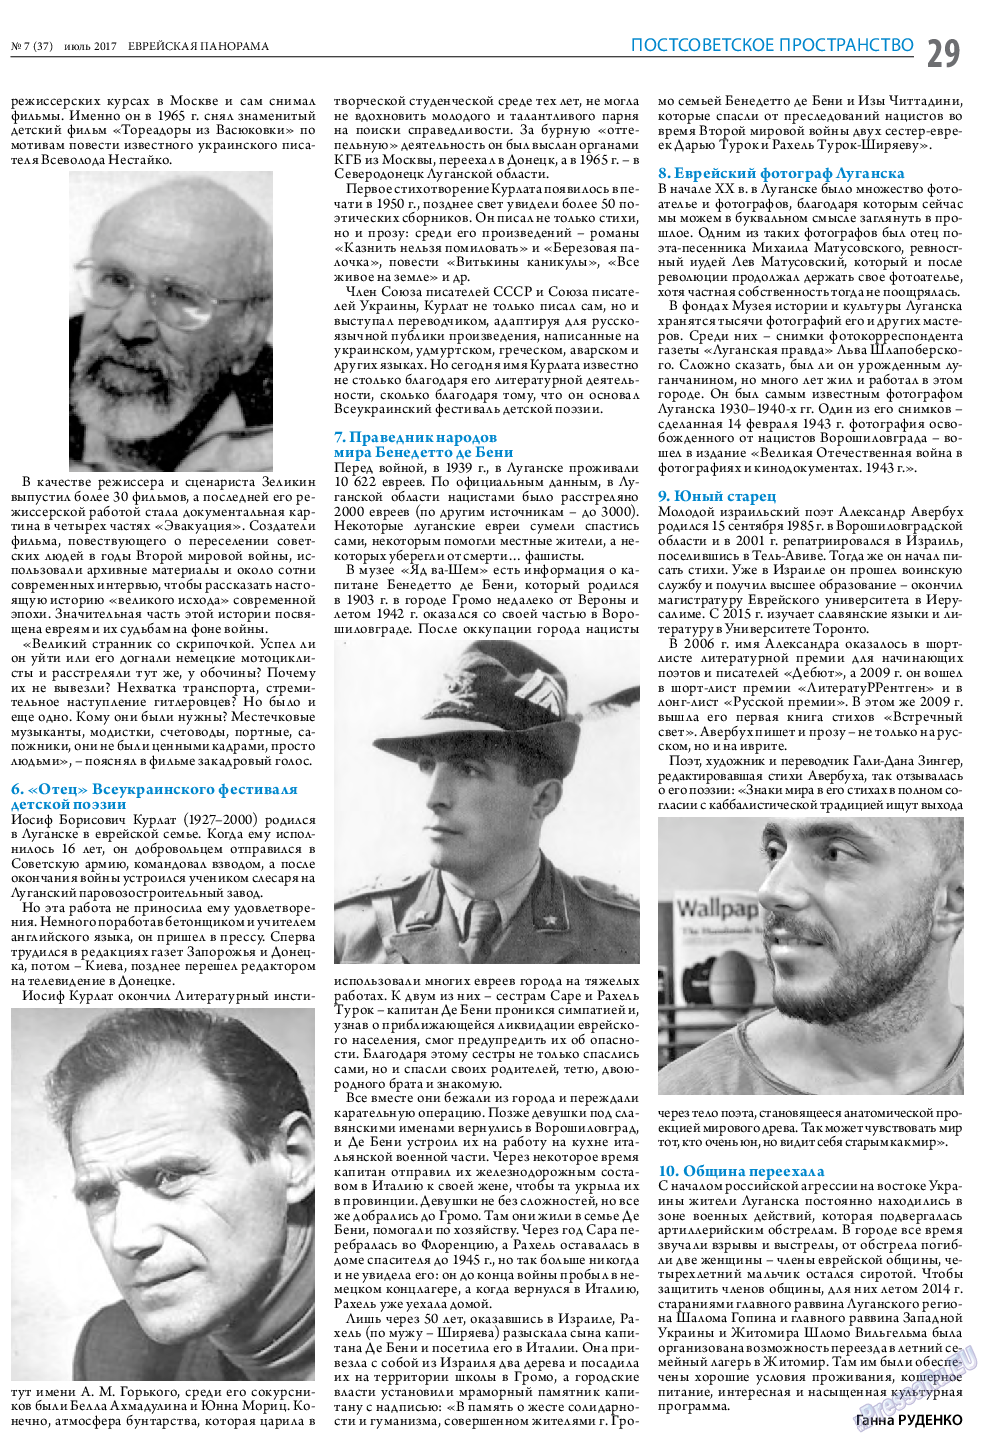 Еврейская панорама, газета. 2017 №7 стр.29